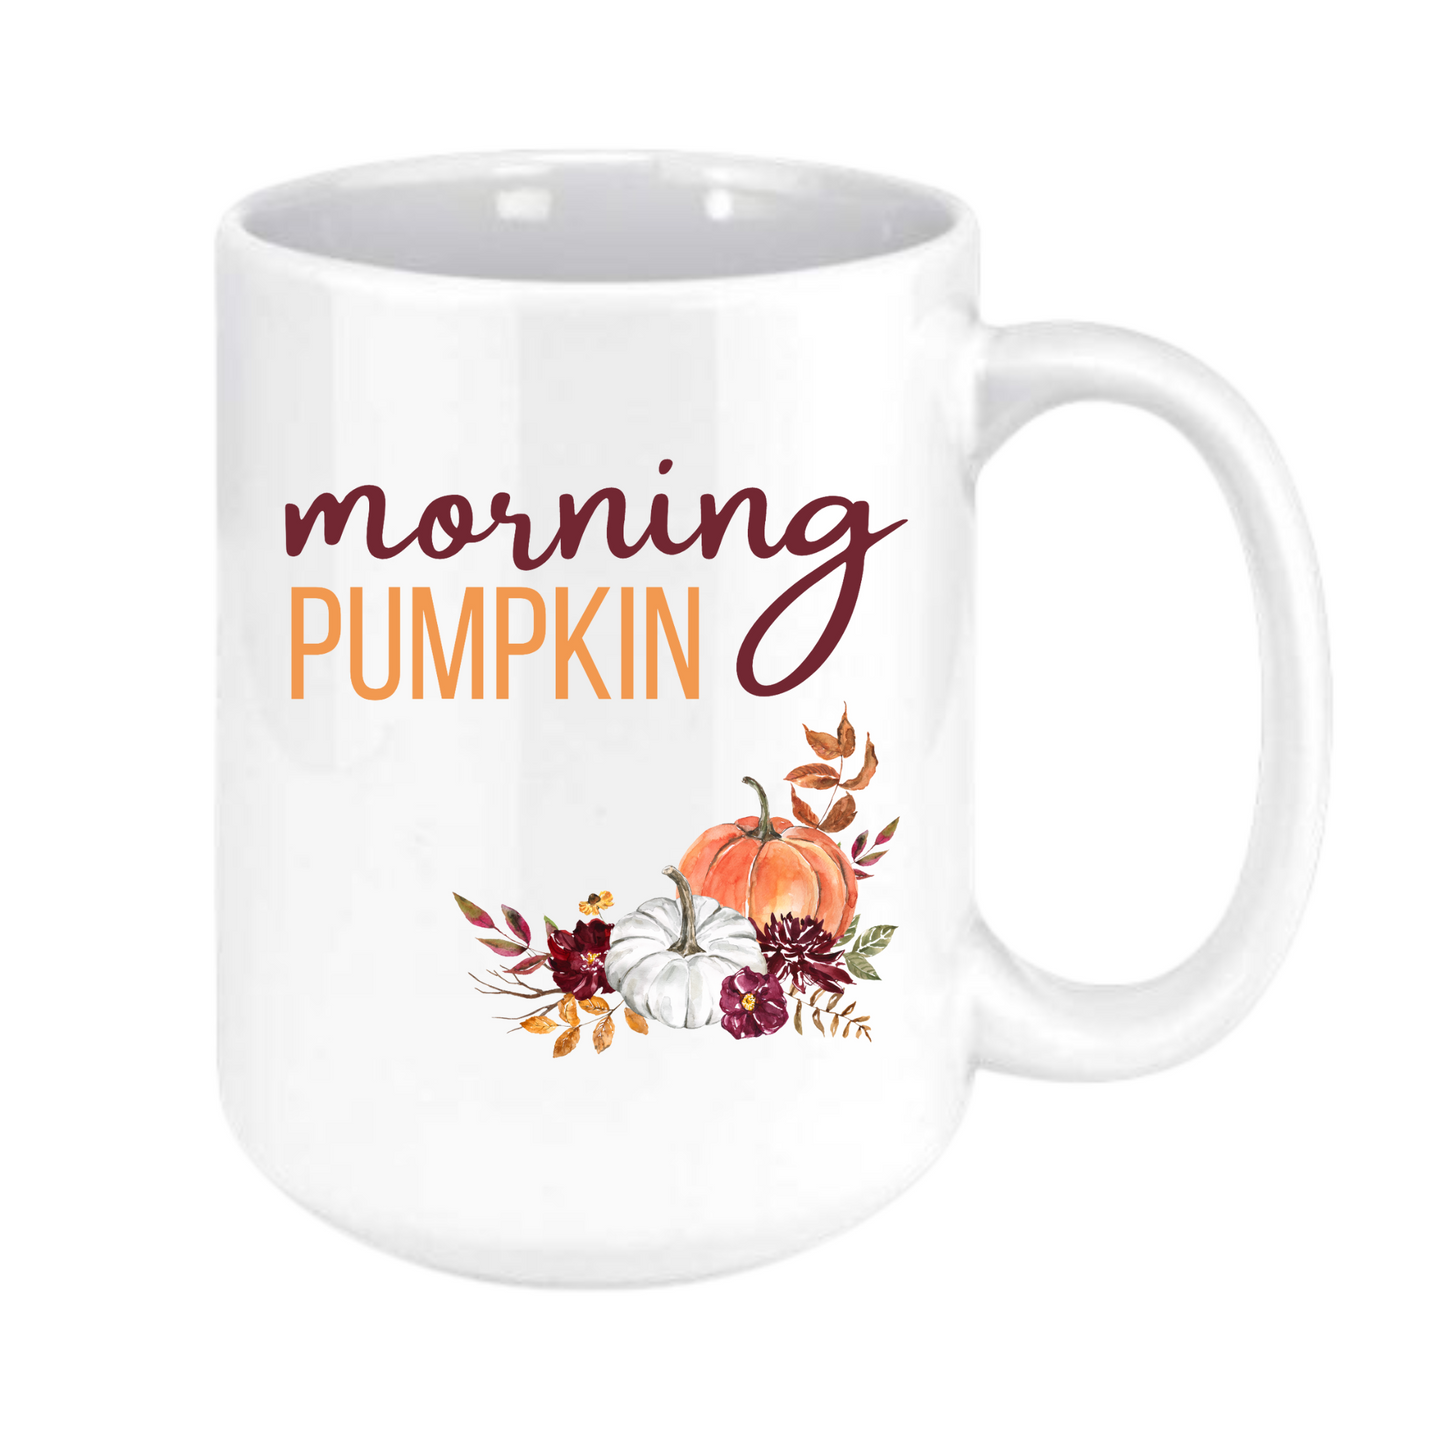 Morning Pumpkin mug